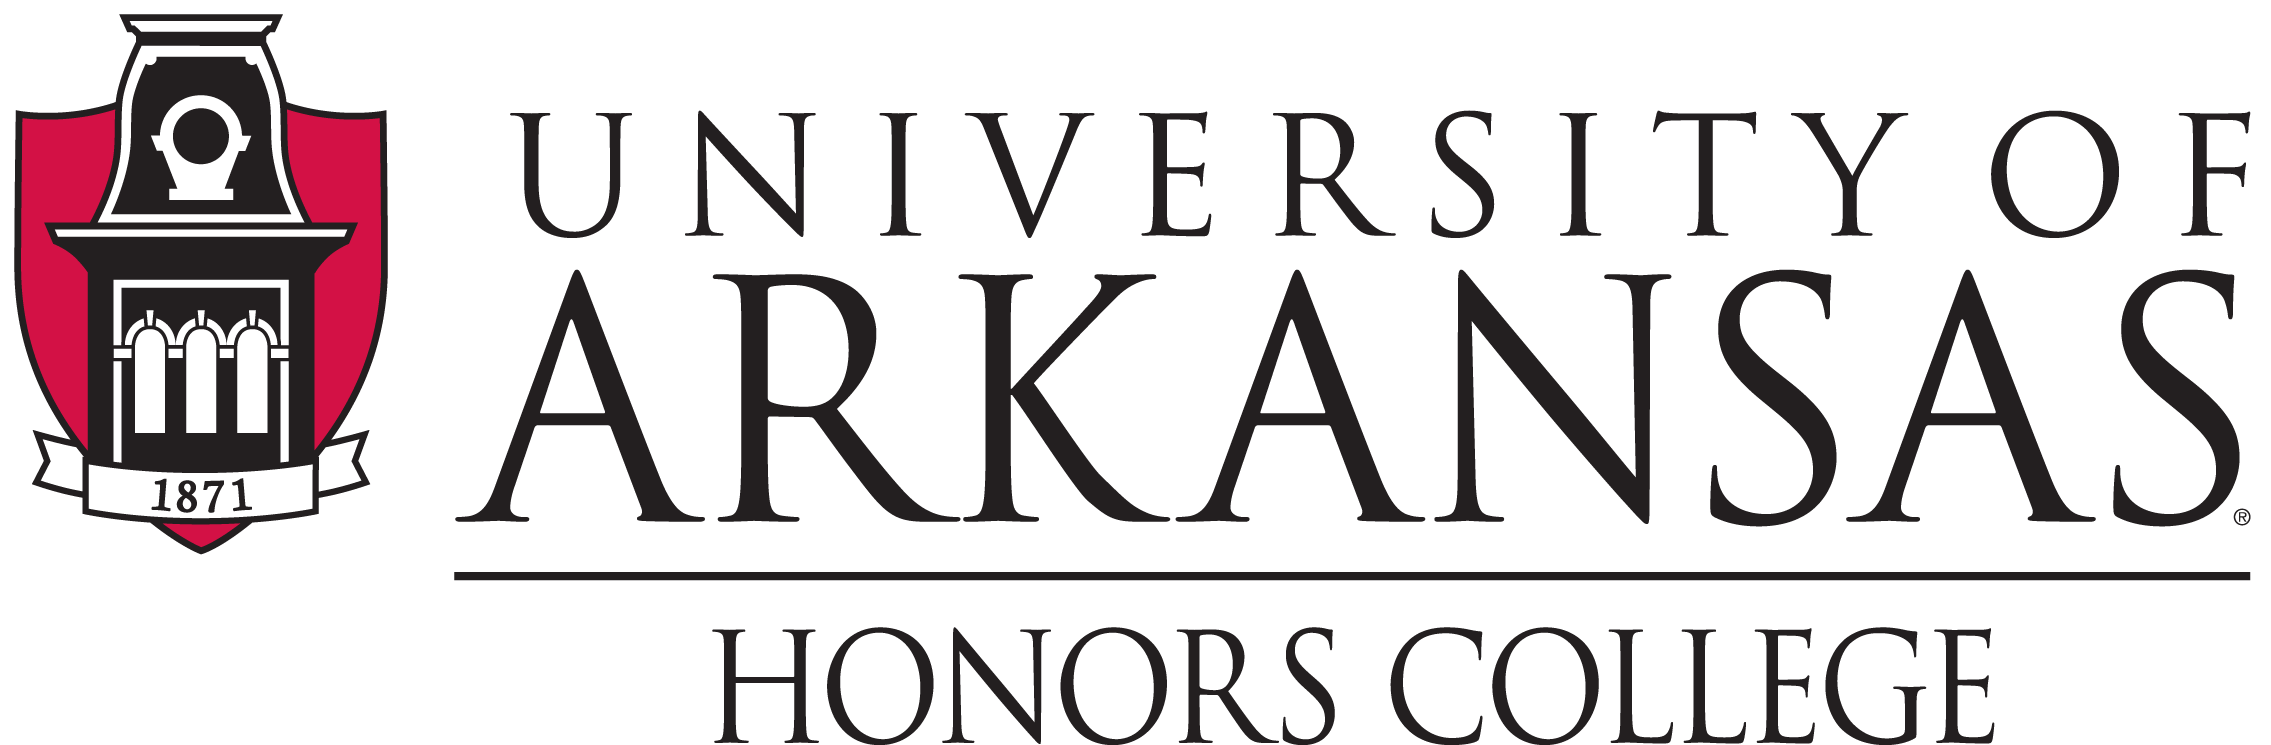 University of Arkansas Logo - Credit Your Grant | Honors College | University of Arkansas